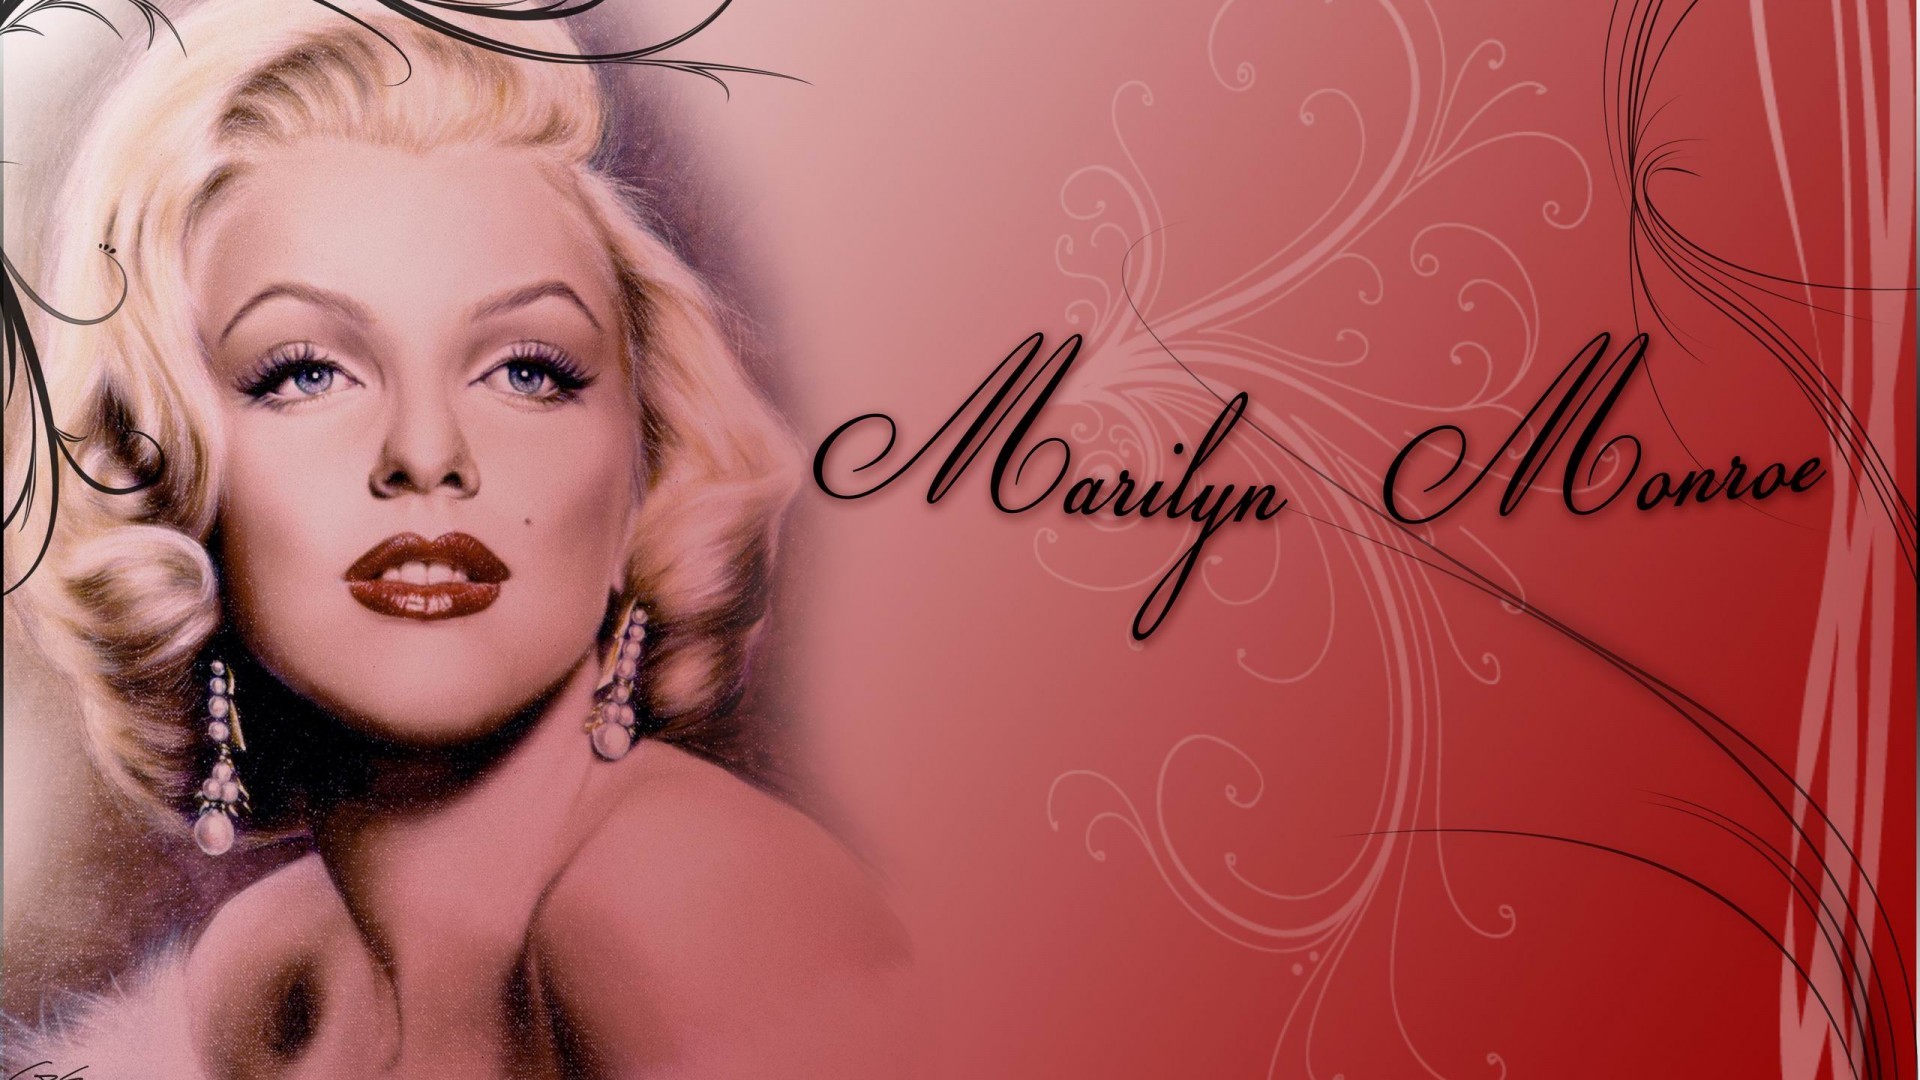 1920x1080 Marilyn-monroe-wallpaper-15-cute-Collection-marilyn-monroe-